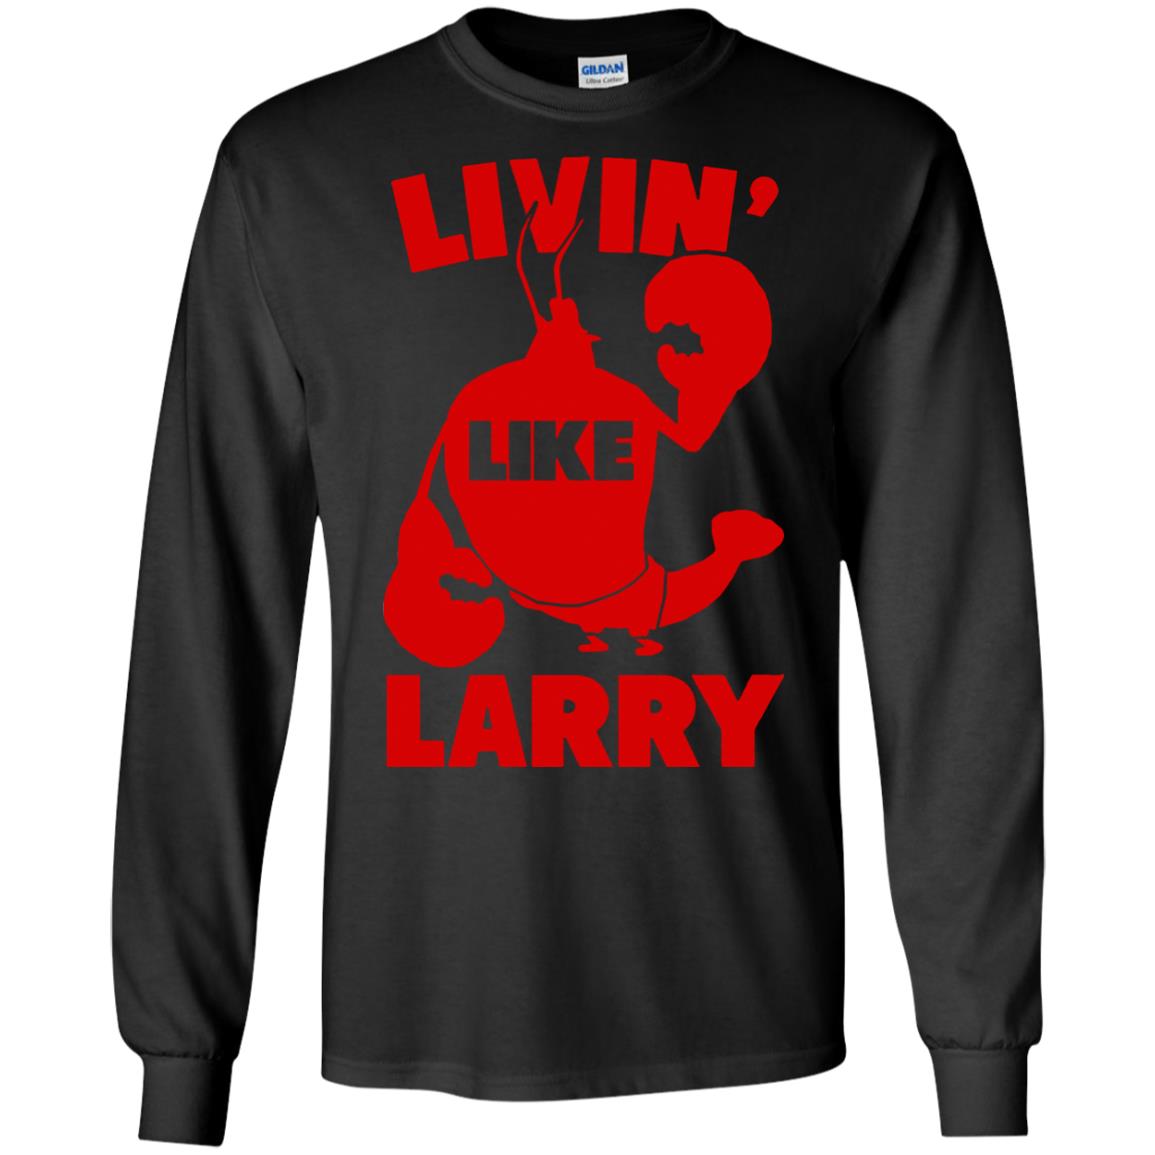 Living Like Larry Shirt - 10% Off - FavorMerch